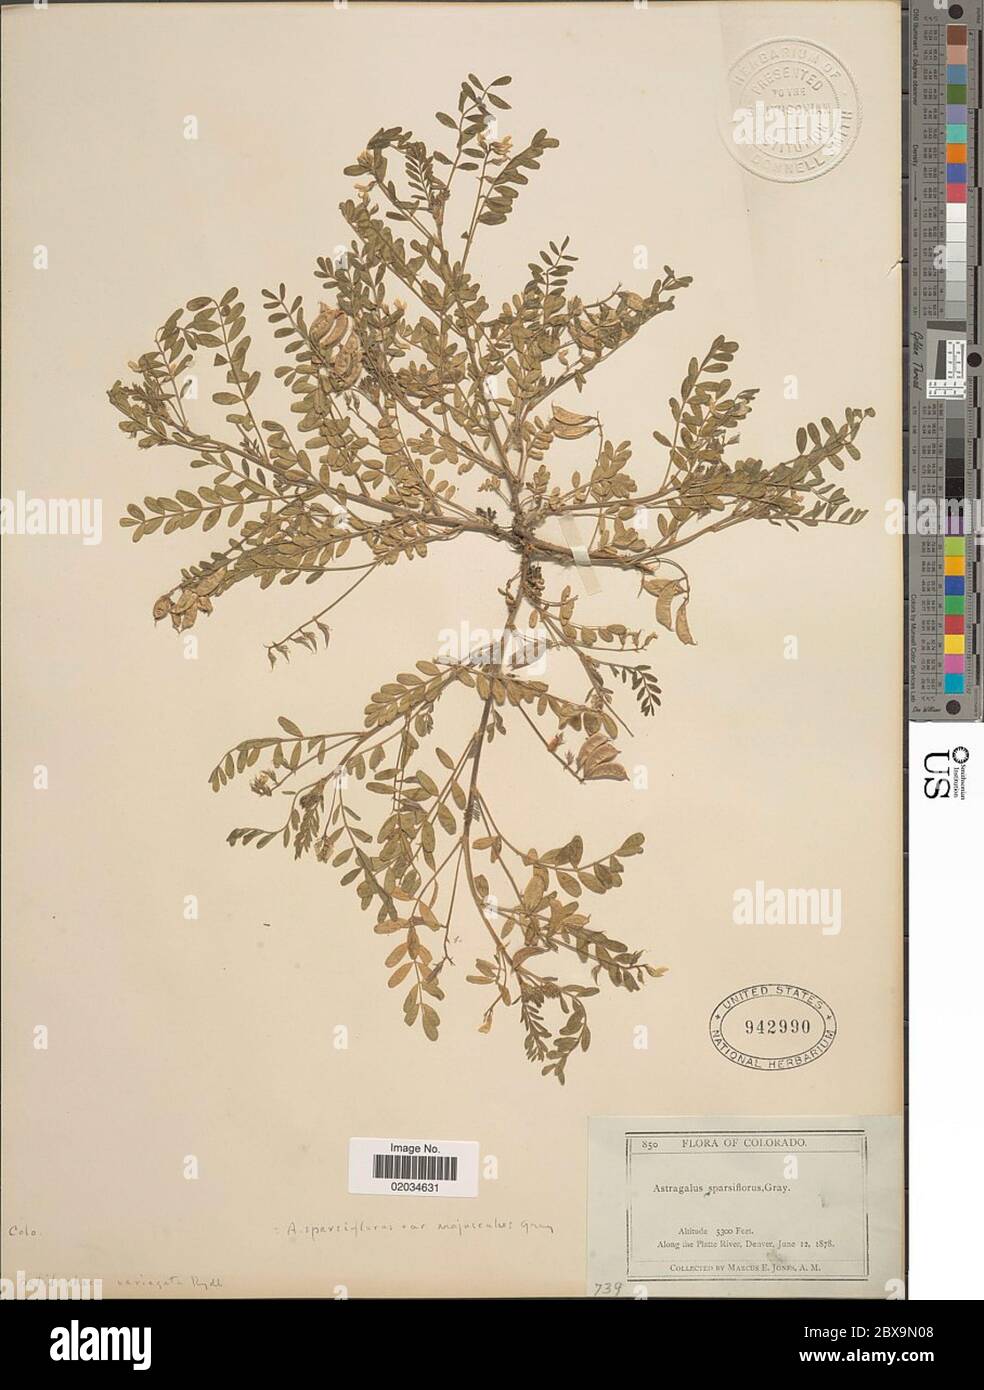 Astragalus sparsiflorus A Gray Astragalus sparsiflorus A Gray. Stock Photo